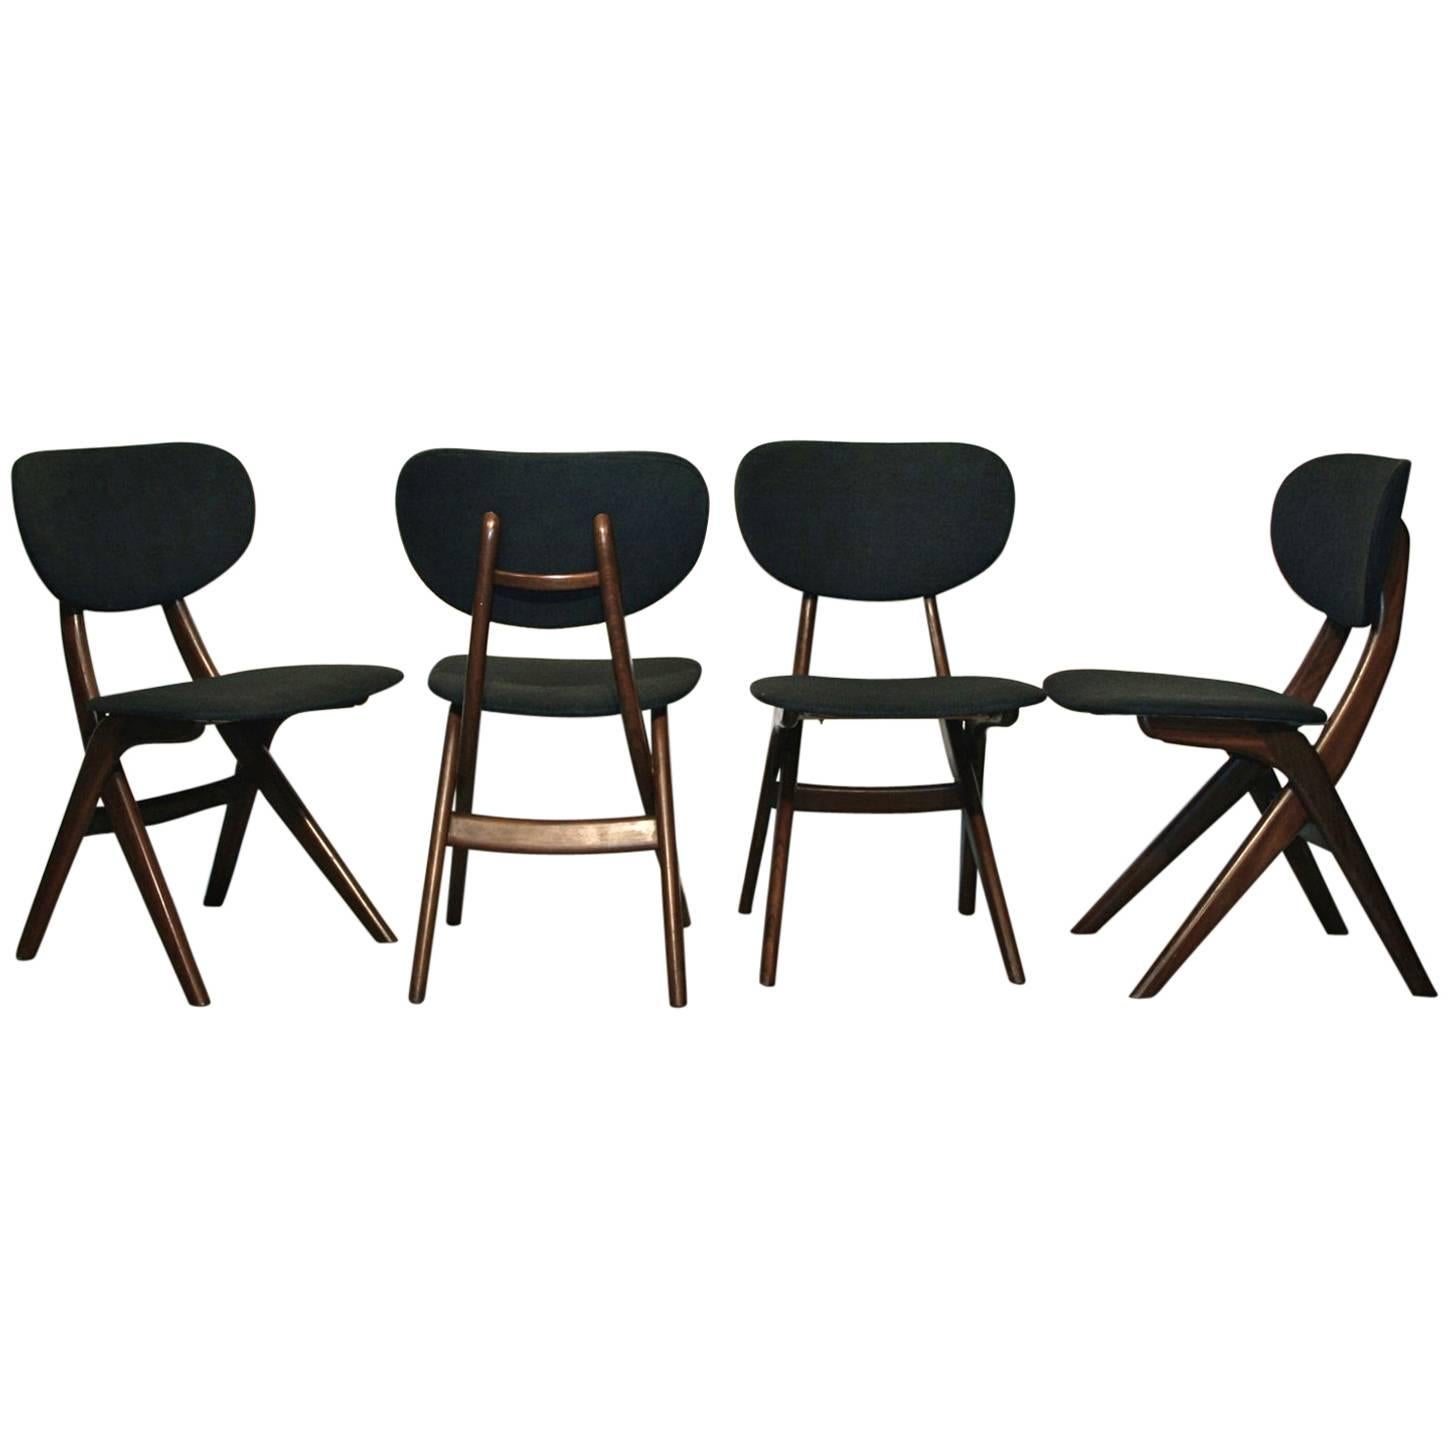 Dining Chairs by Louis Van Teeffelen for Wébé, Dutch Design, 1950s For Sale